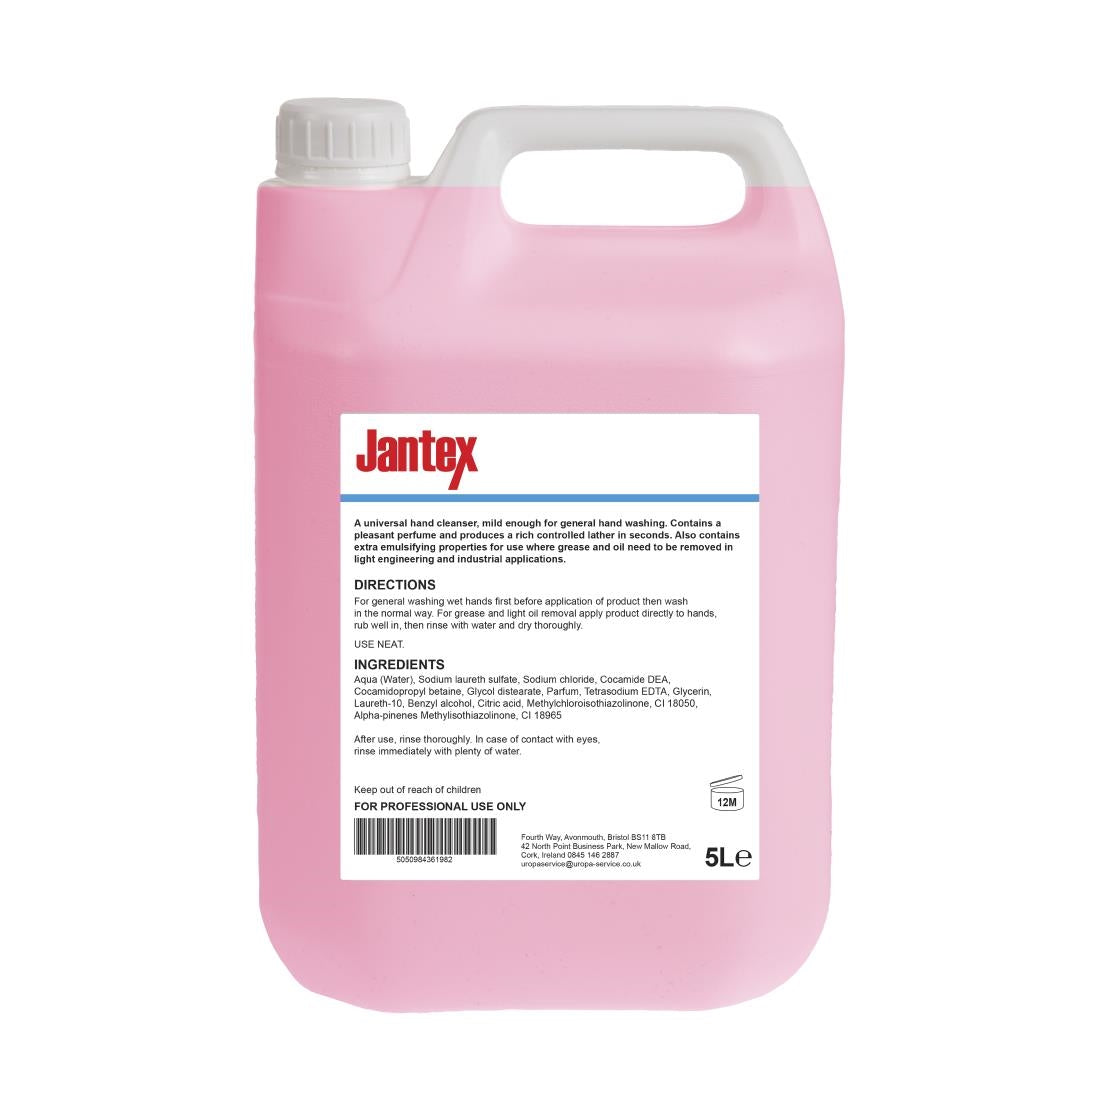 GG934 Jantex Perfumed Liquid Hand Soap 5Ltr JD Catering Equipment Solutions Ltd